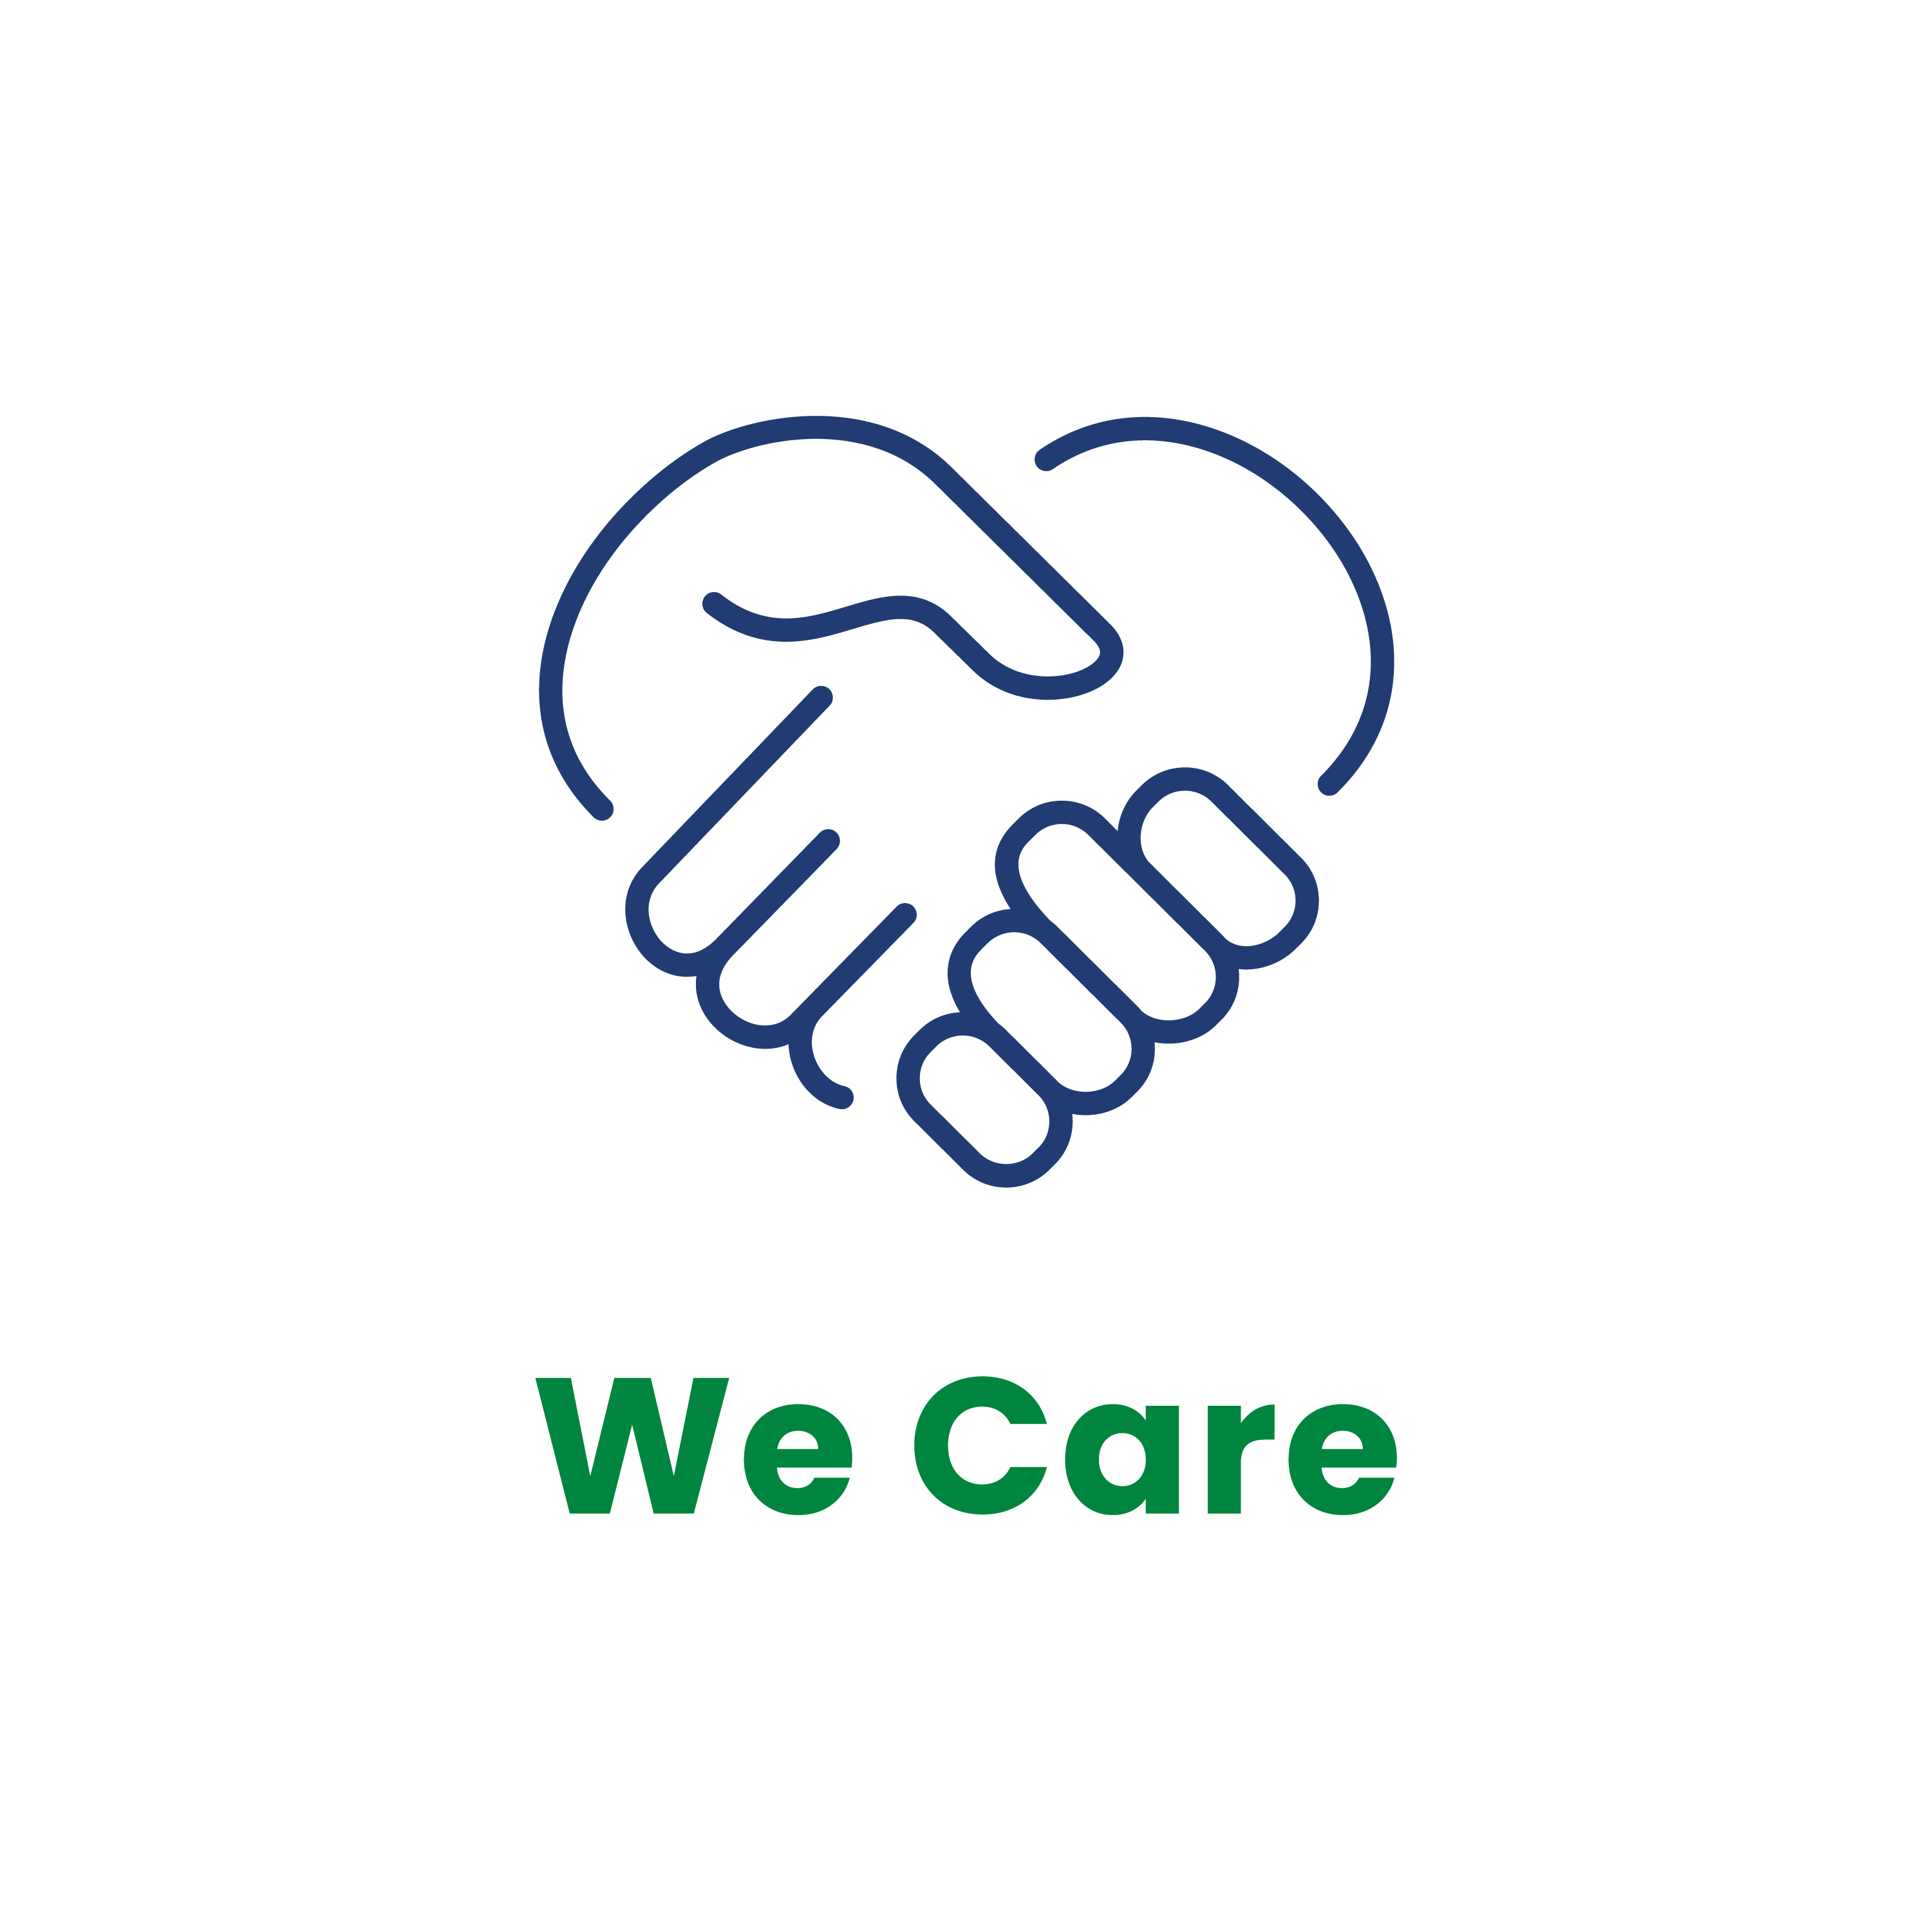 Value logo - We Care